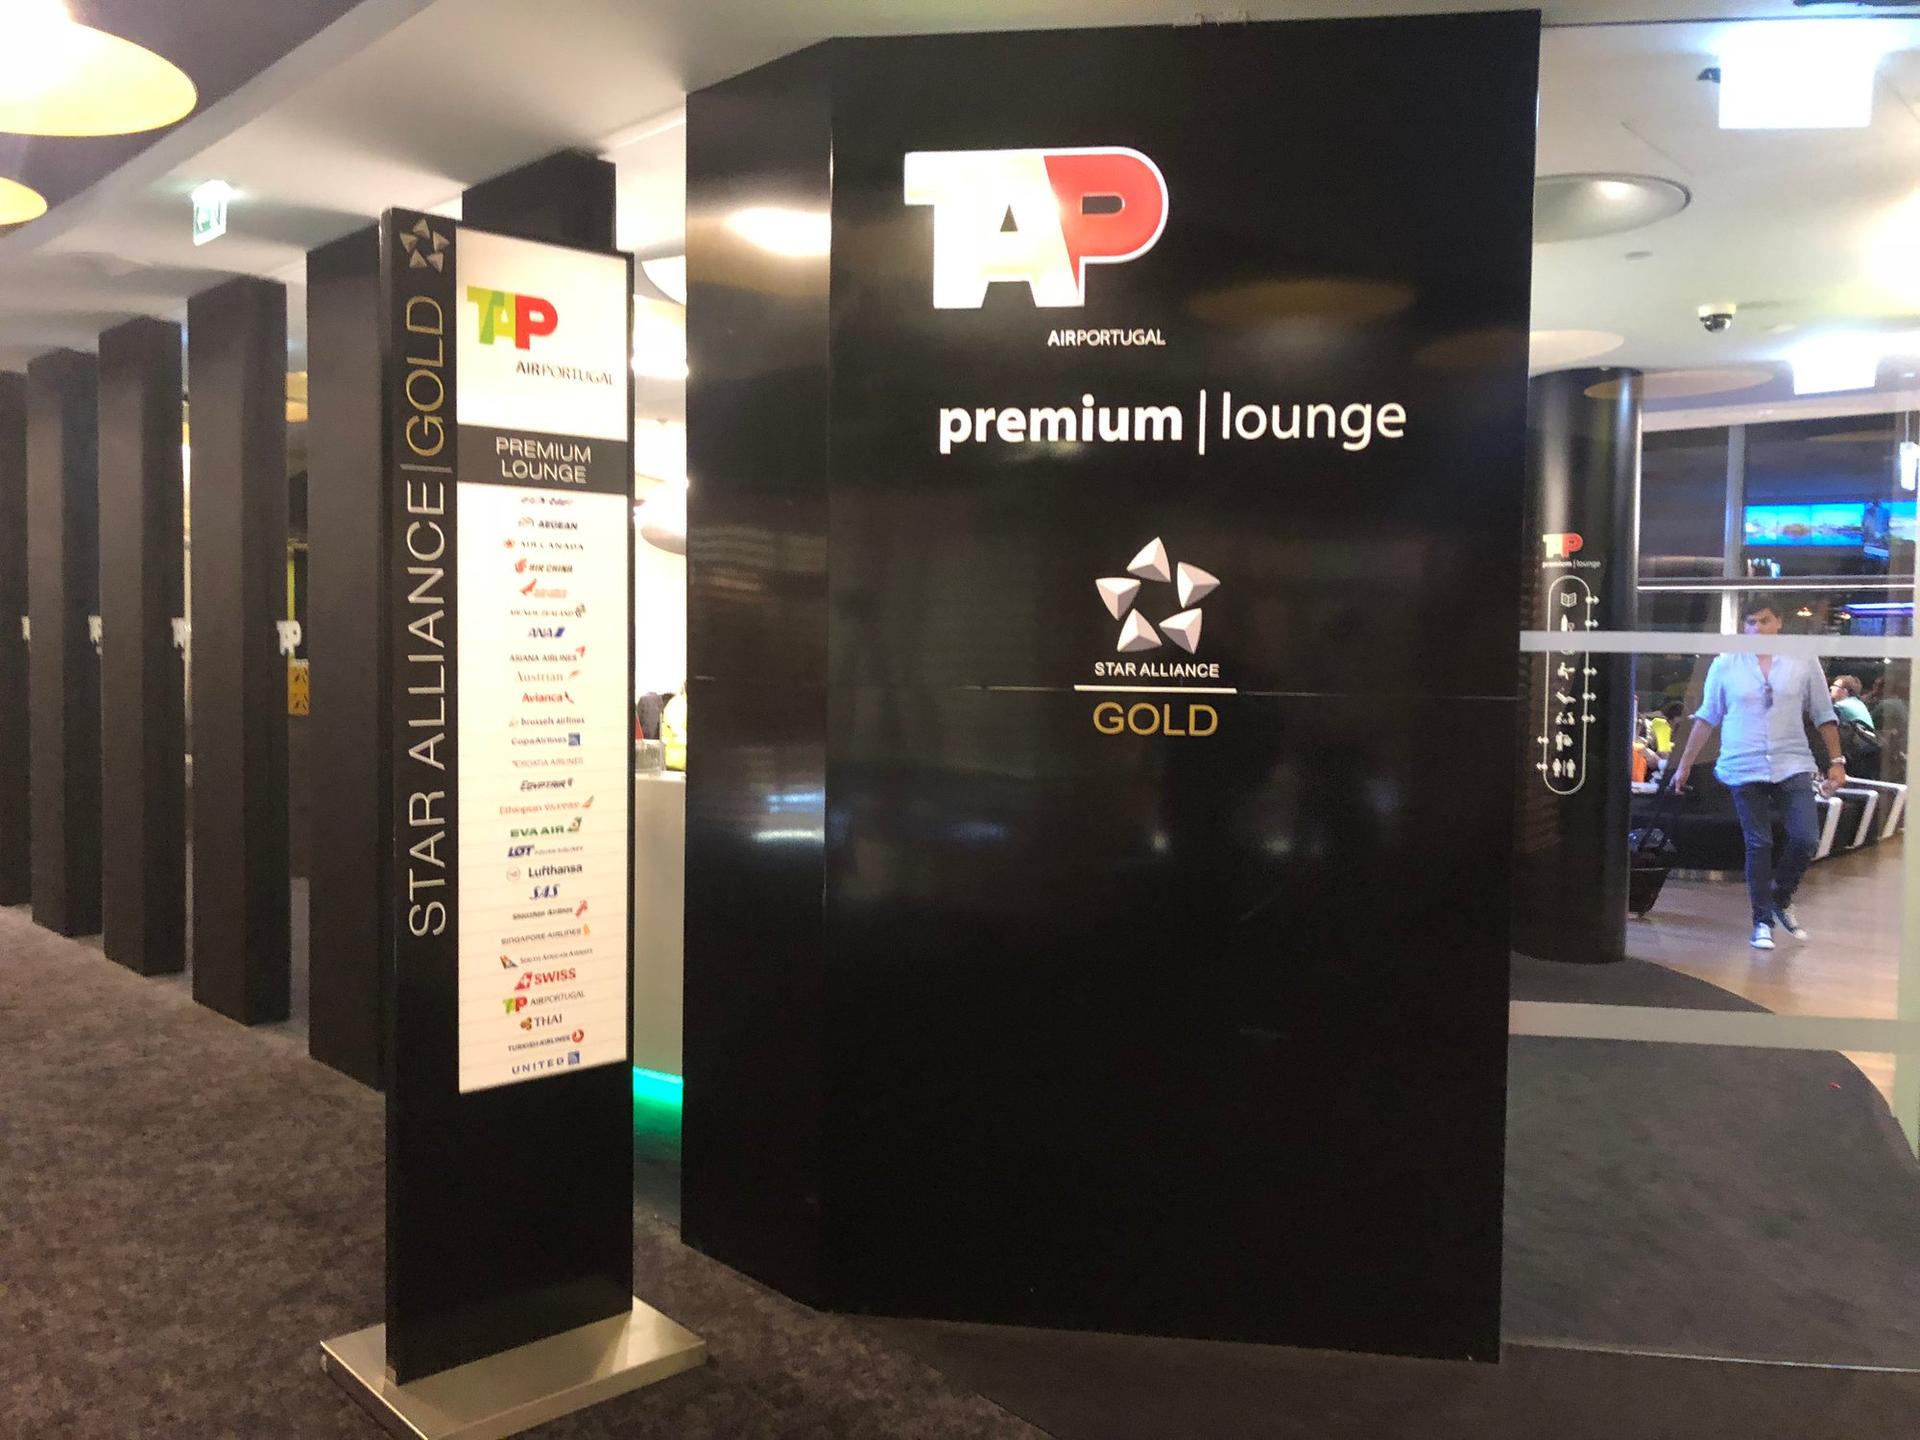 TAP Premium Lounge image 8 of 14